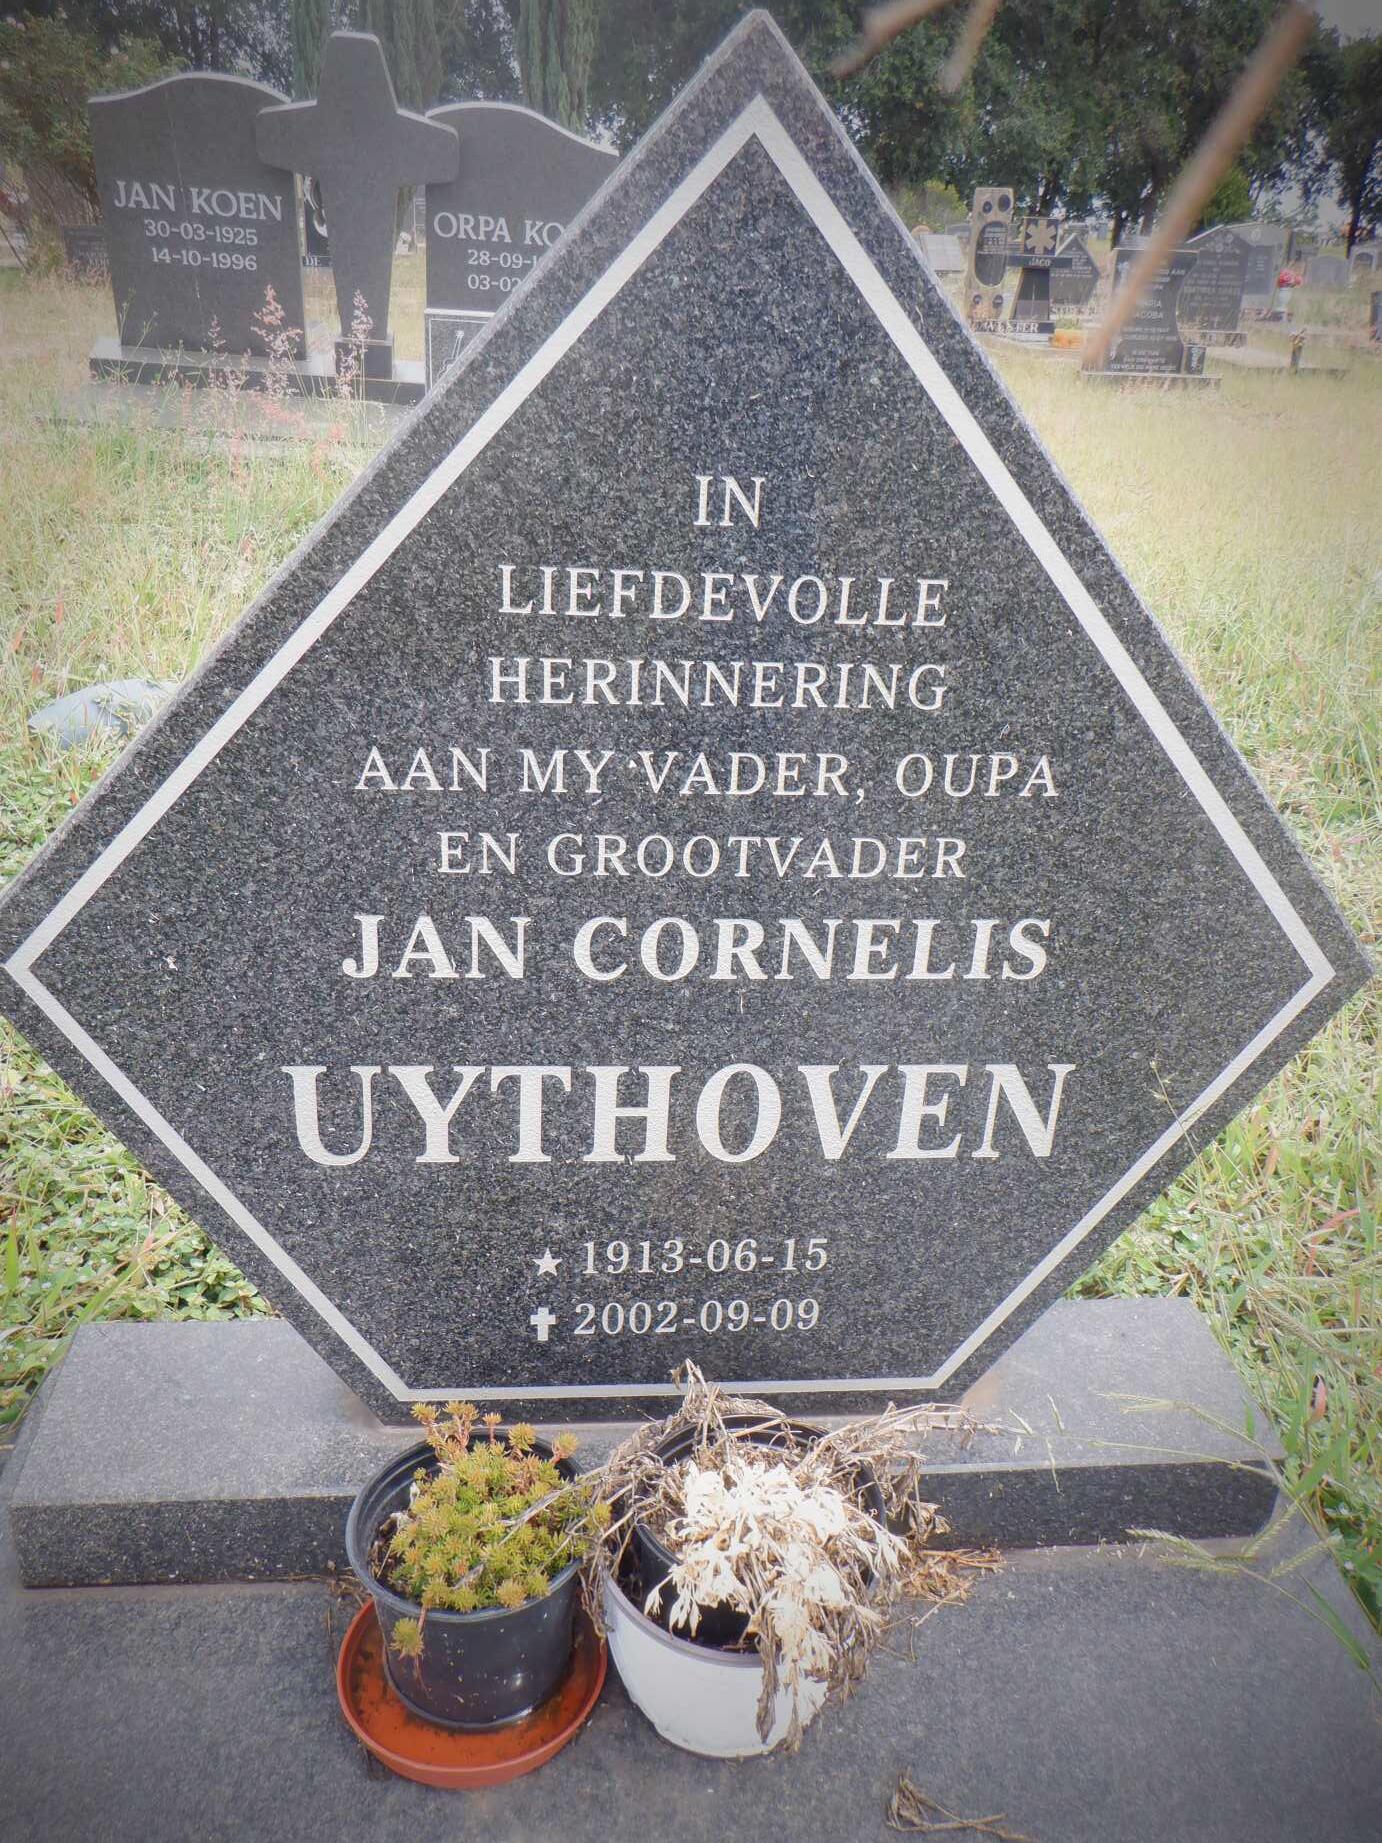 UYTHOVEN Jan Cornelis 1913-2002